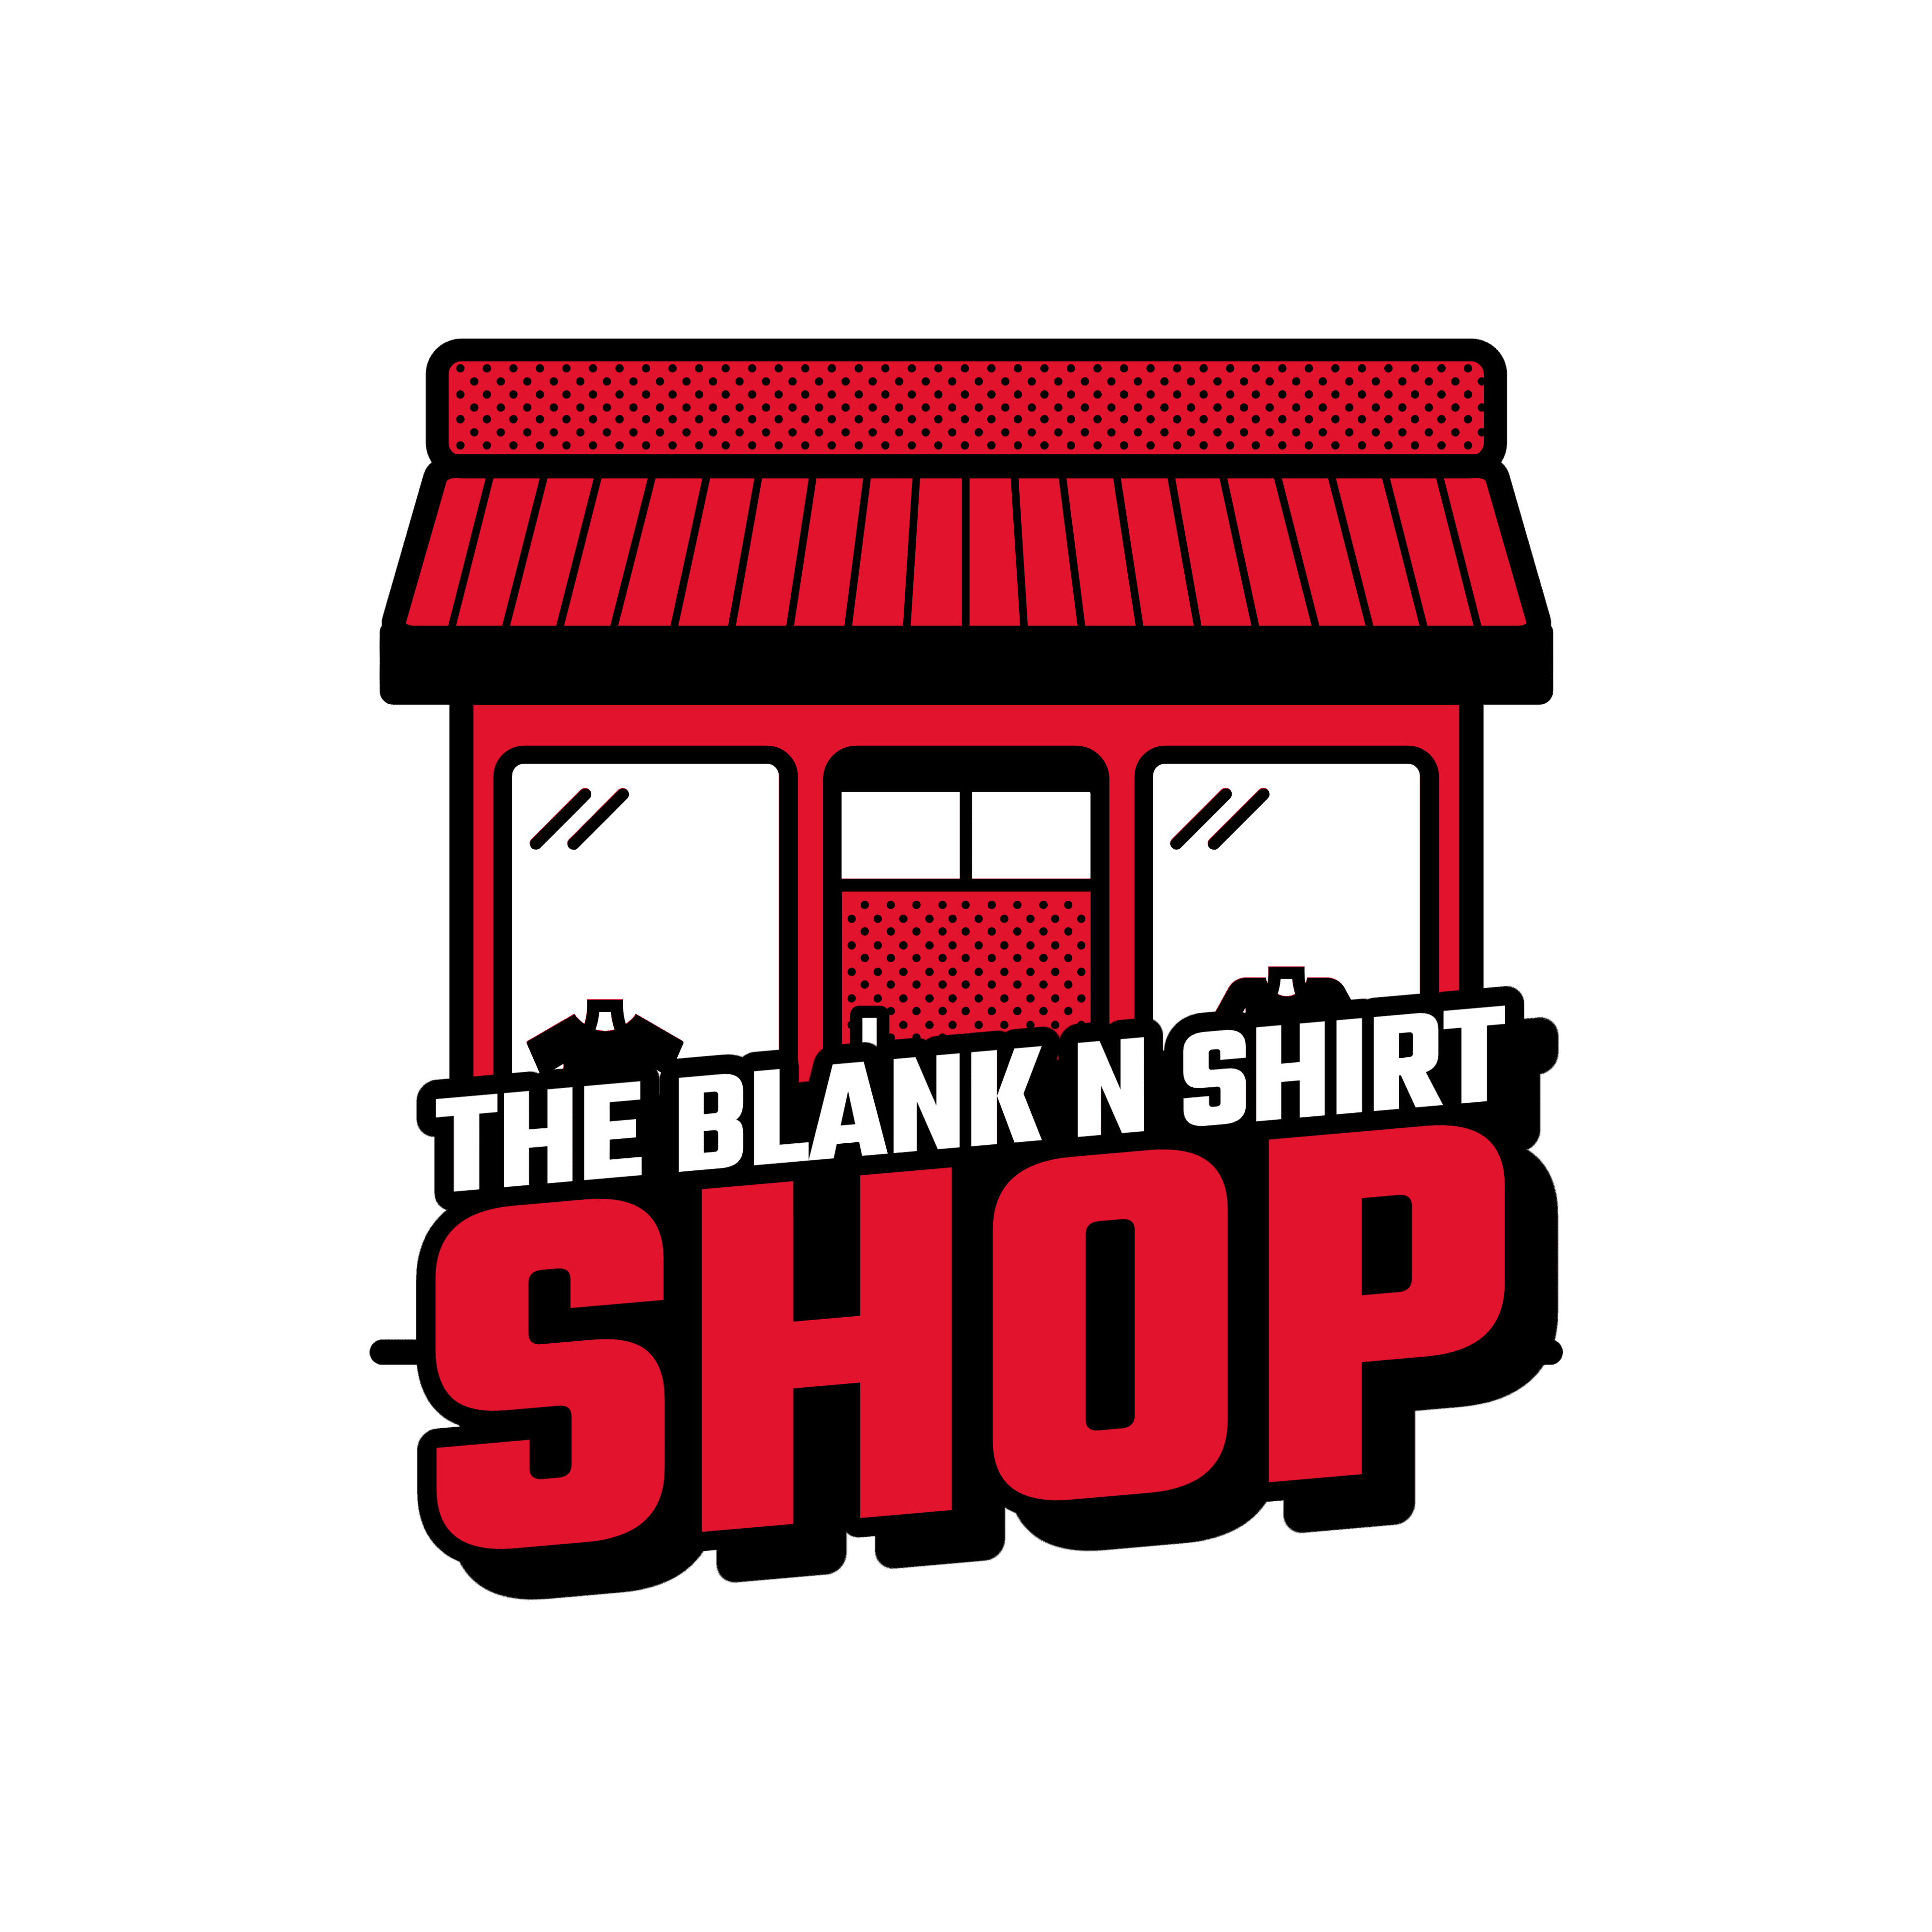 The Blank N Shirt Shop